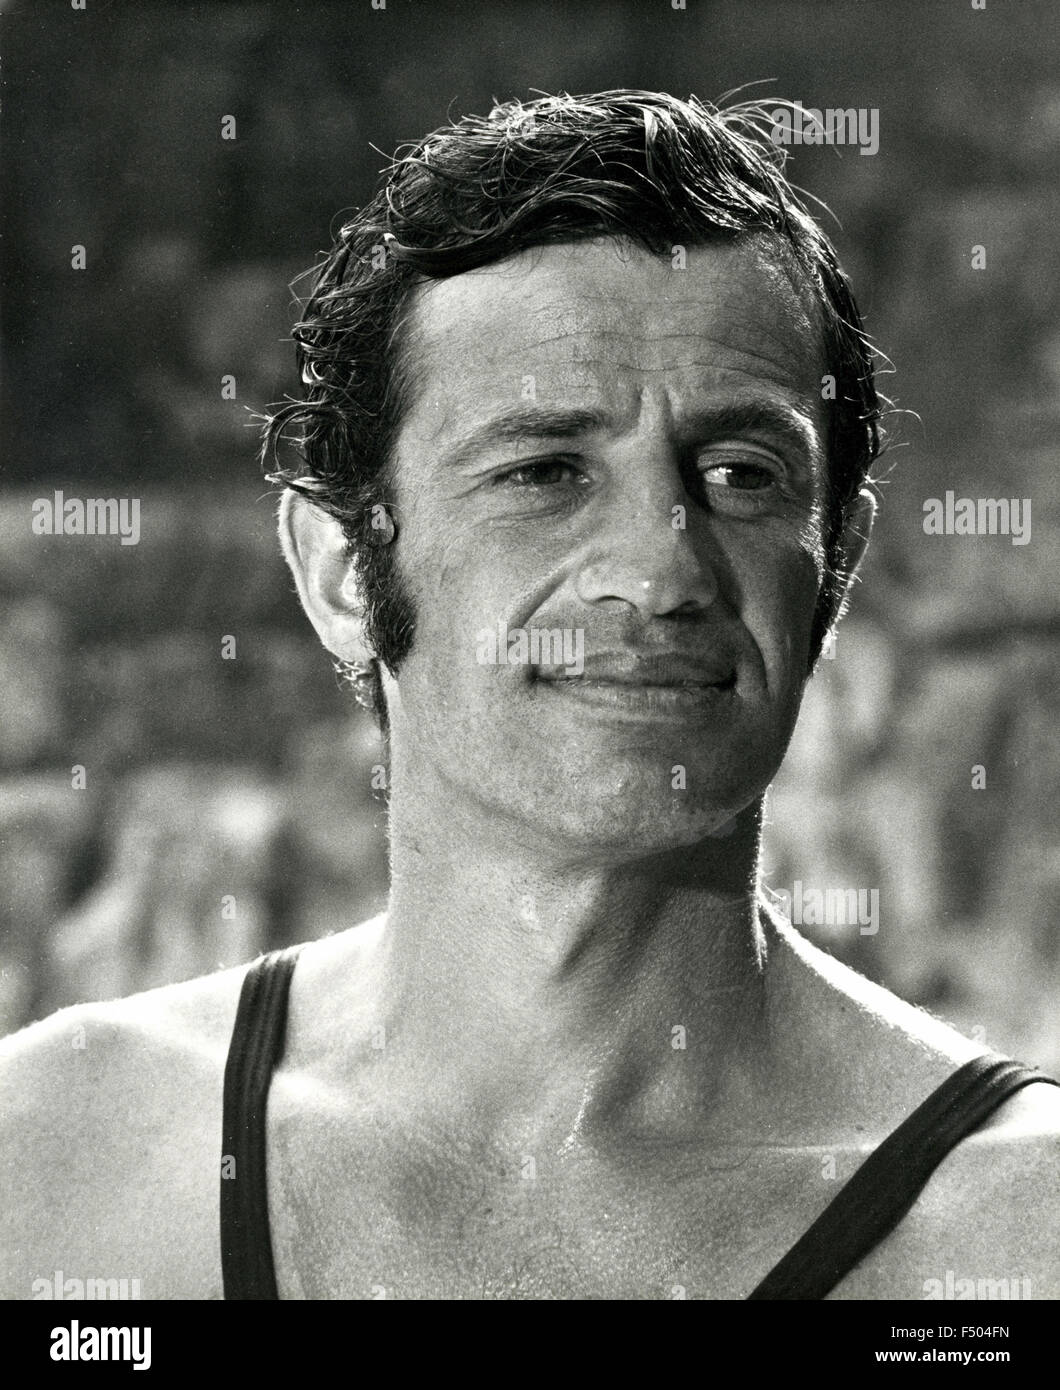 The French actor Jean-Paul Belmondo in black tank top Stock Photo